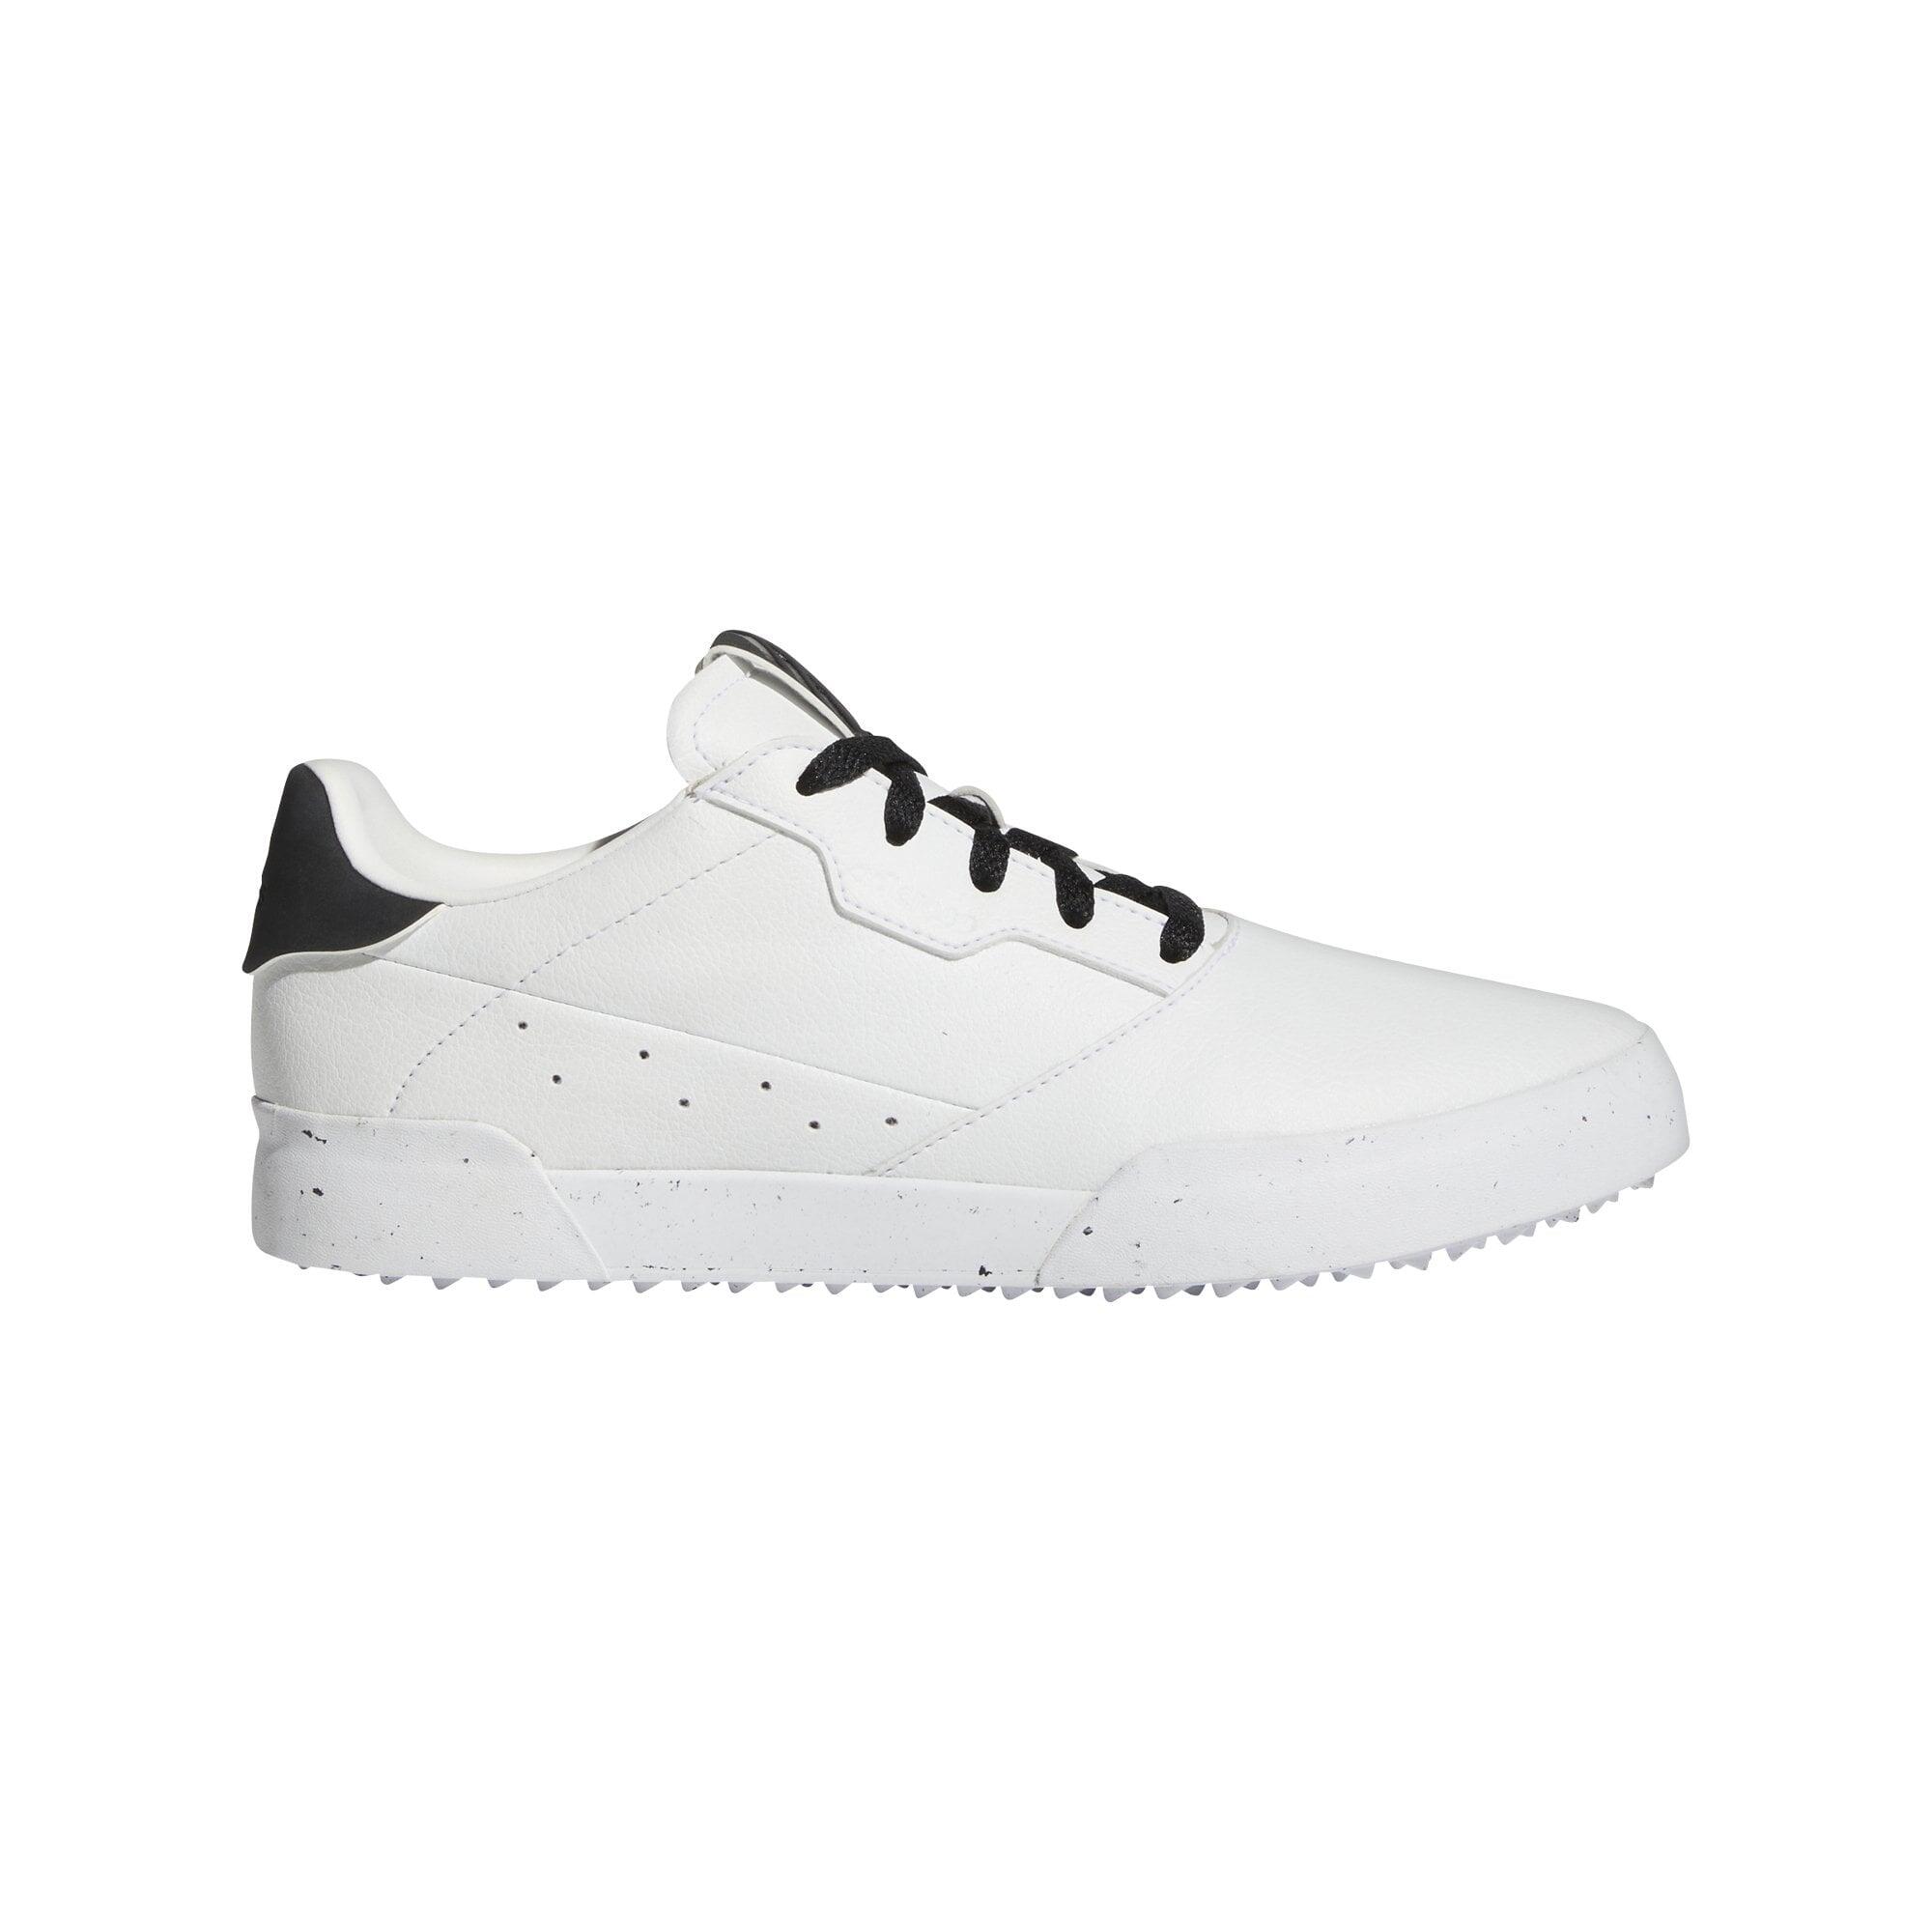 ADIDAS adidas Women's Adicross Retro Spikeless Golf Shoes - White